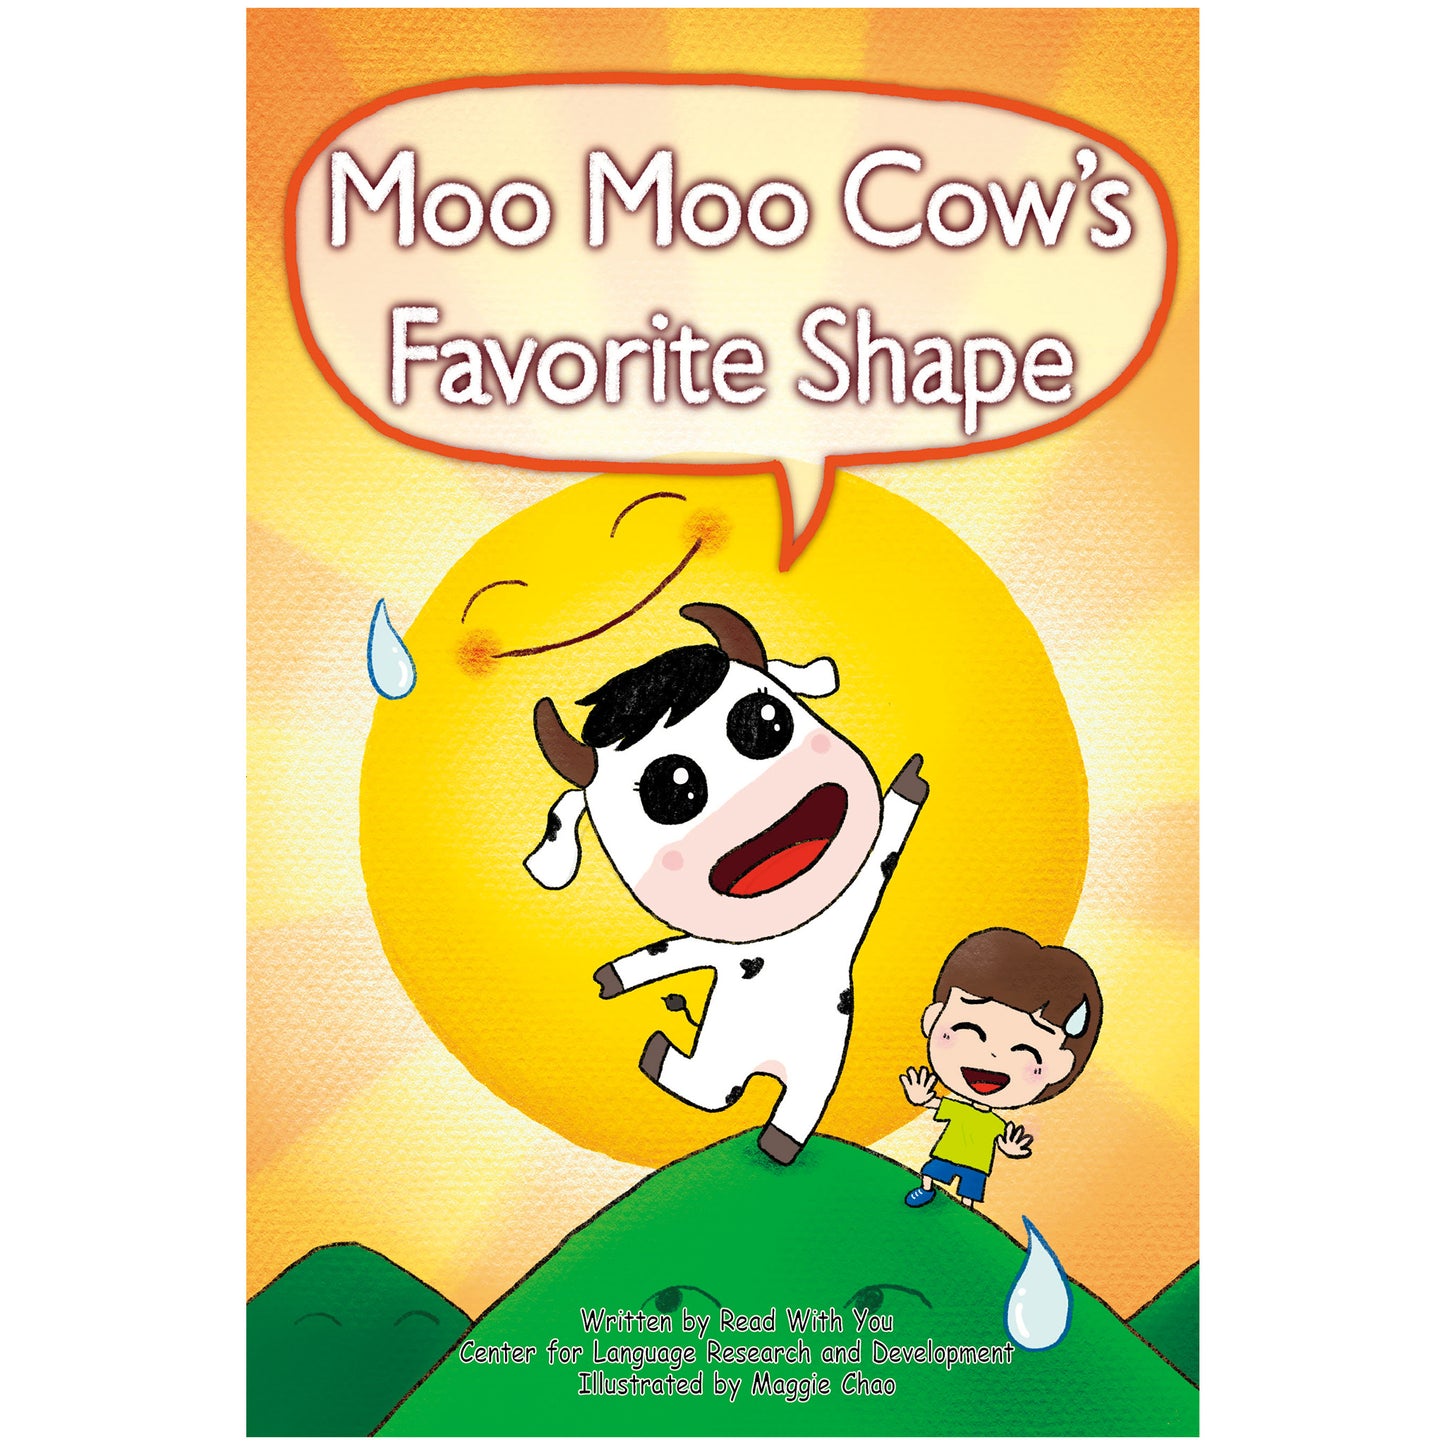 Moo Moo Cow's Favorite Shape